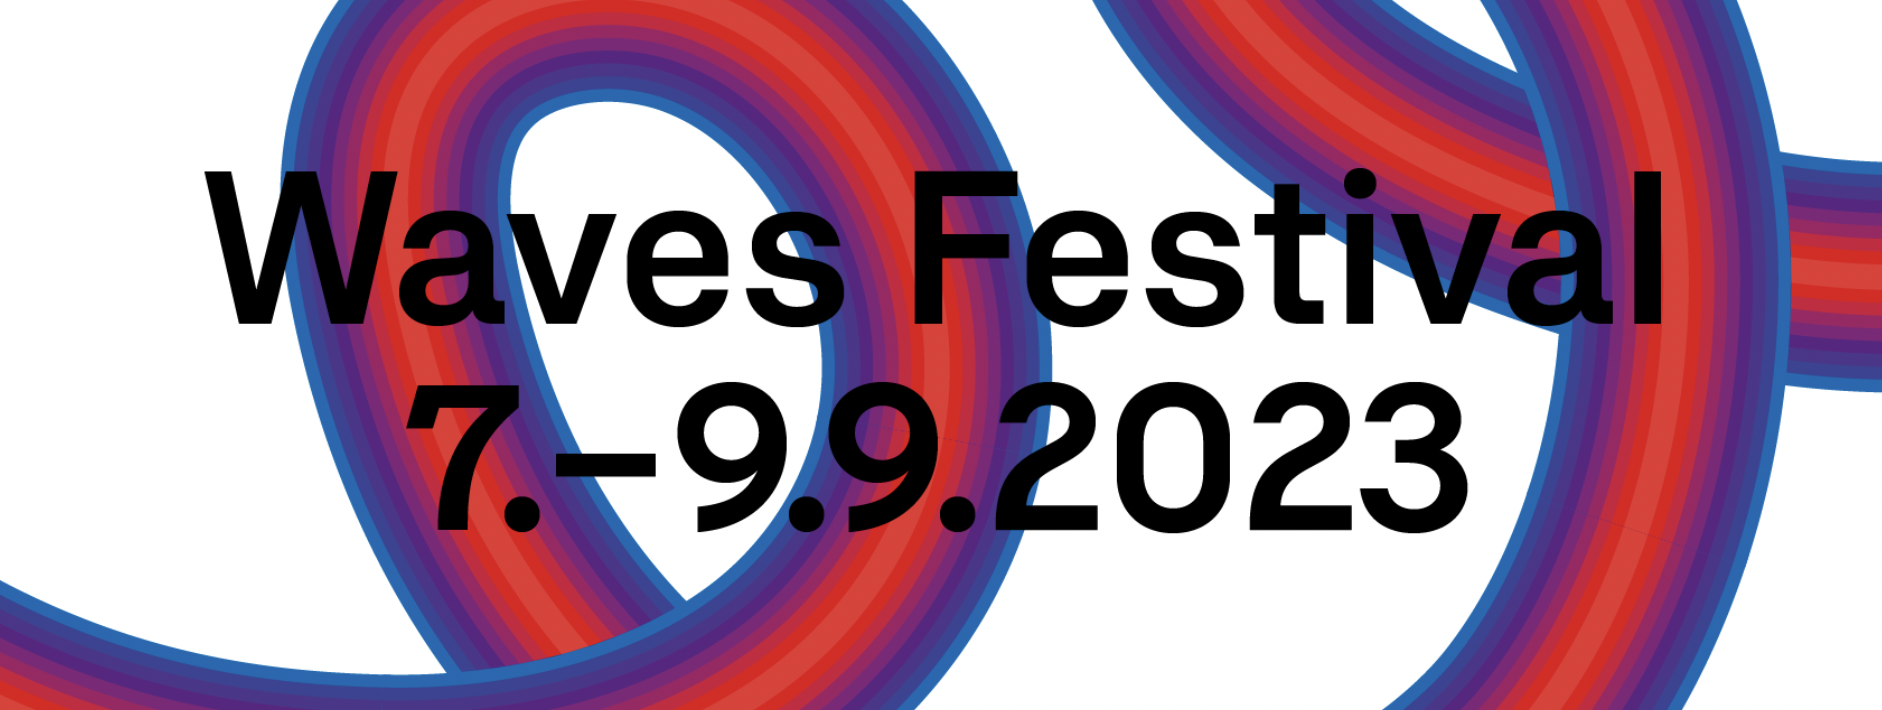 Waves Festival 2023 am 7. September 2023 @ WUK.